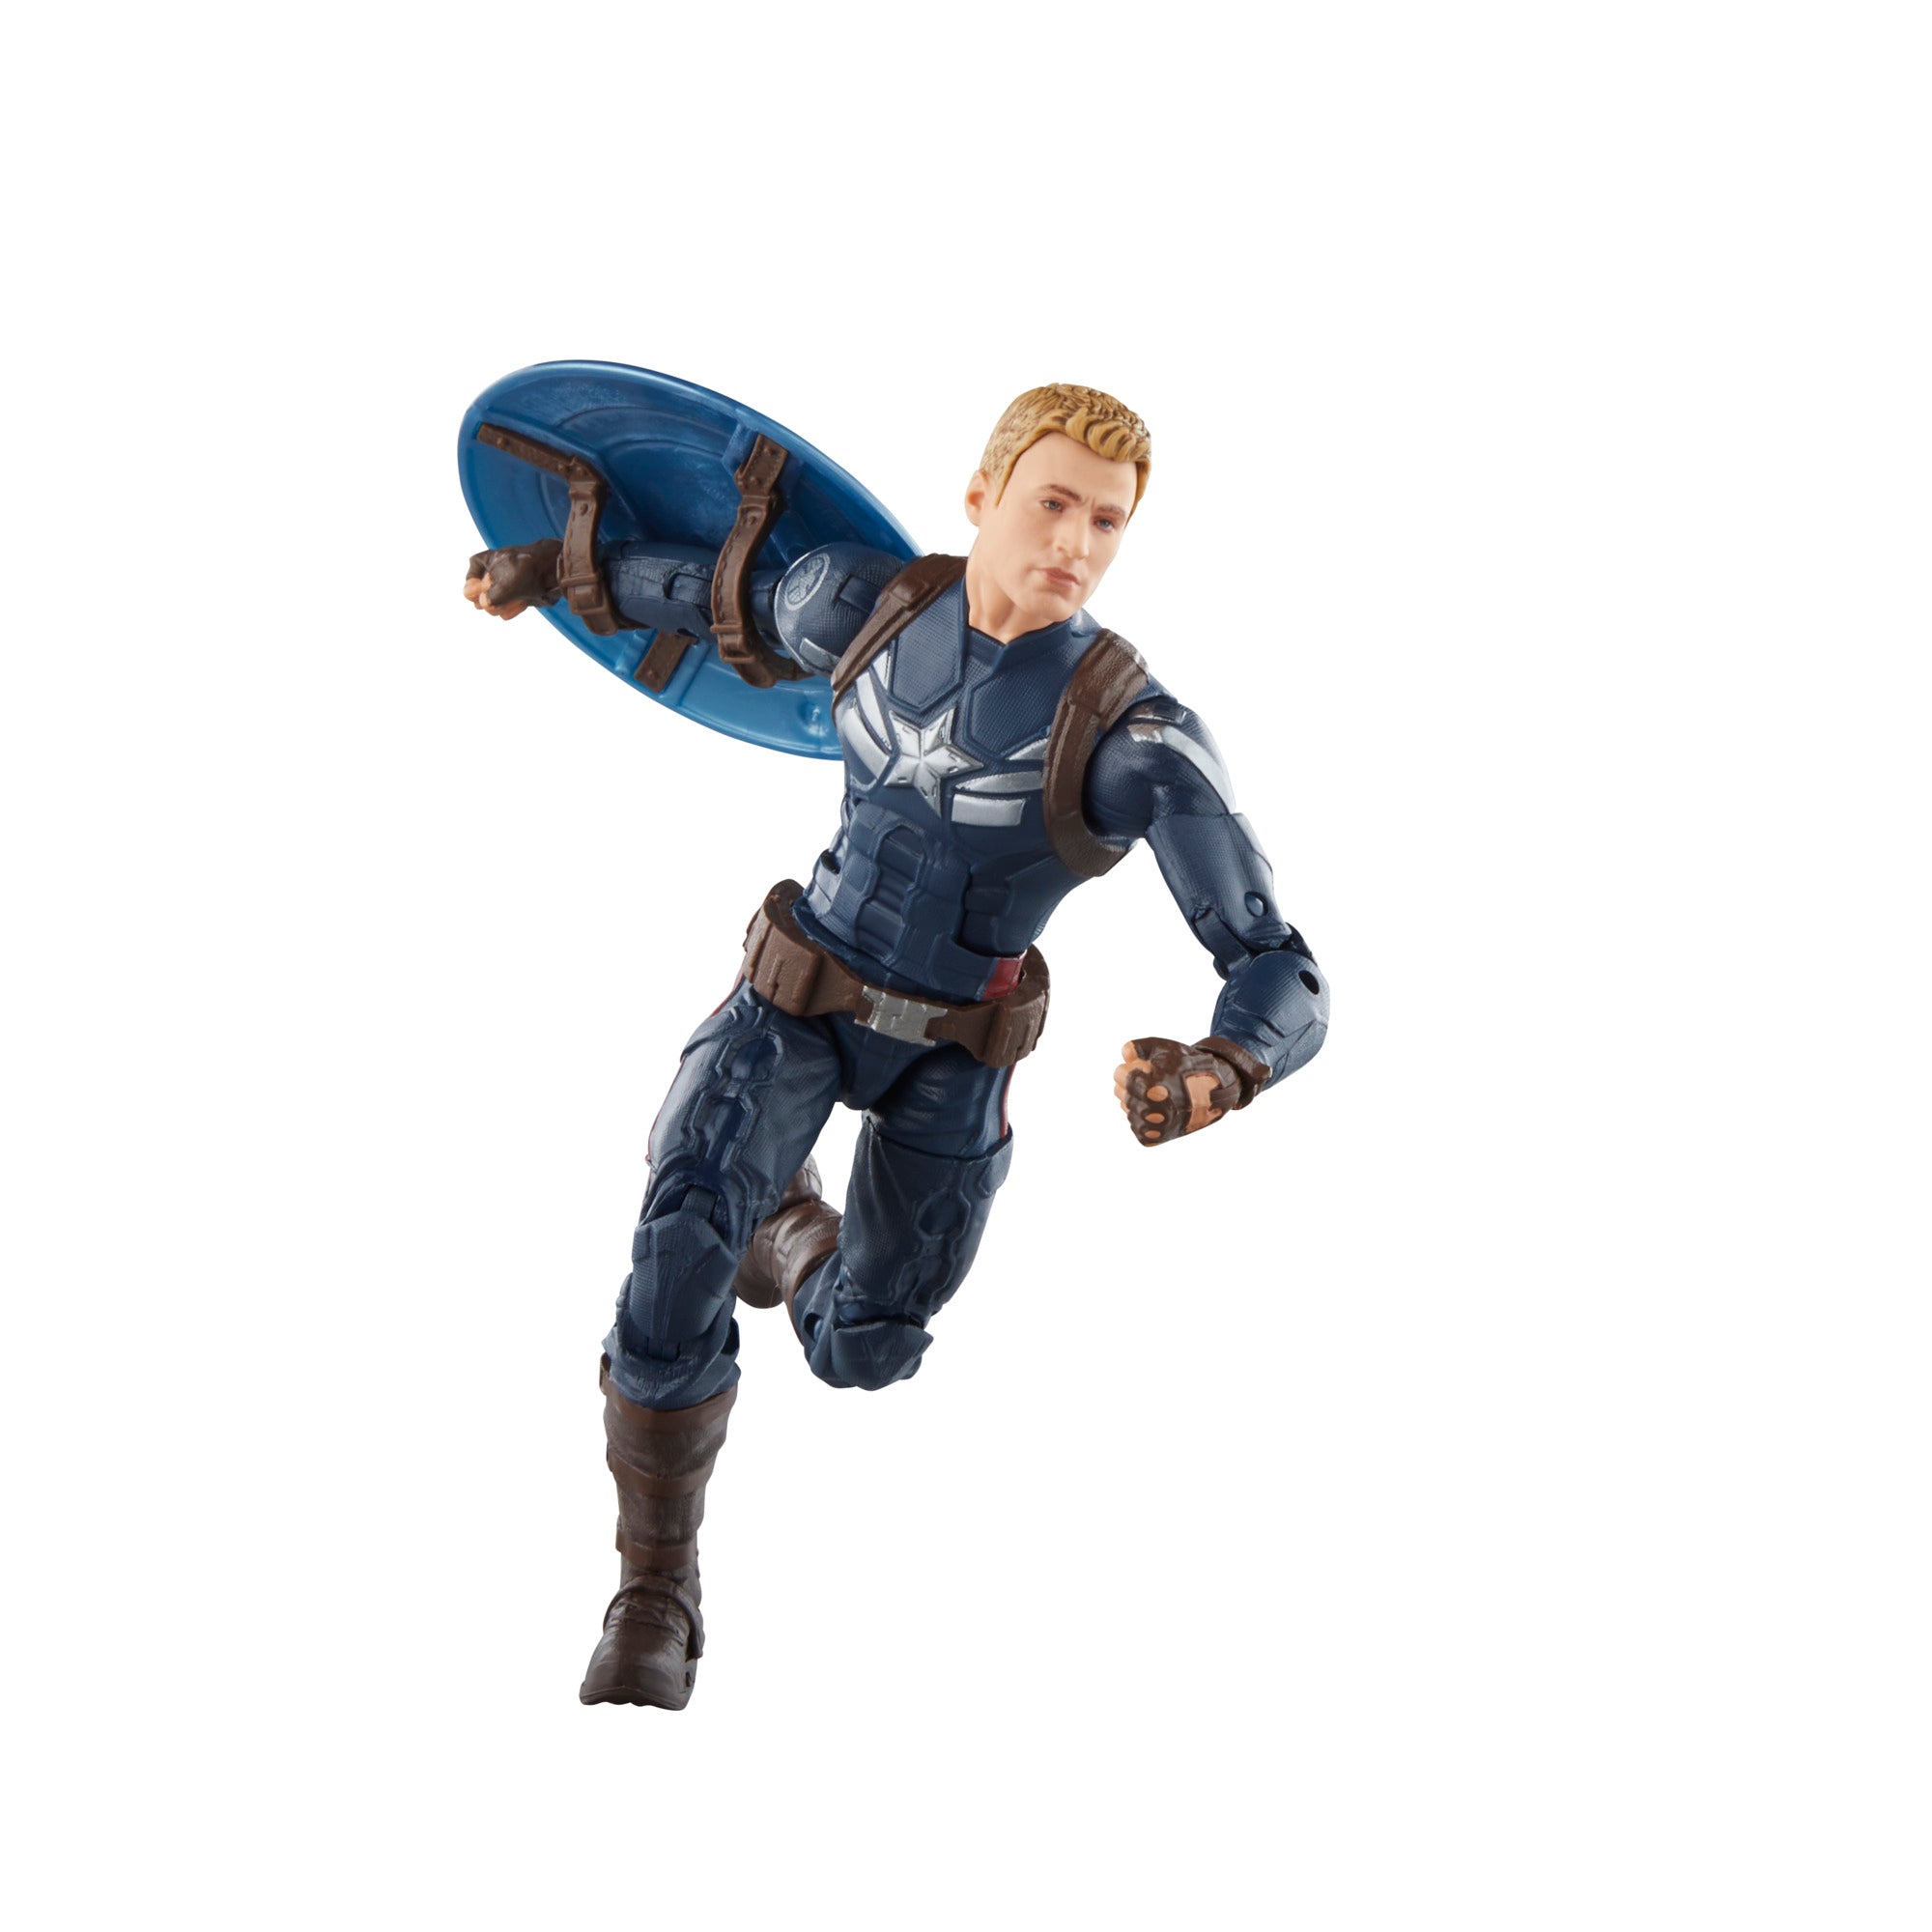  Hasbro Marvel Gamerverse 6-inch Thor Action Figure Toy